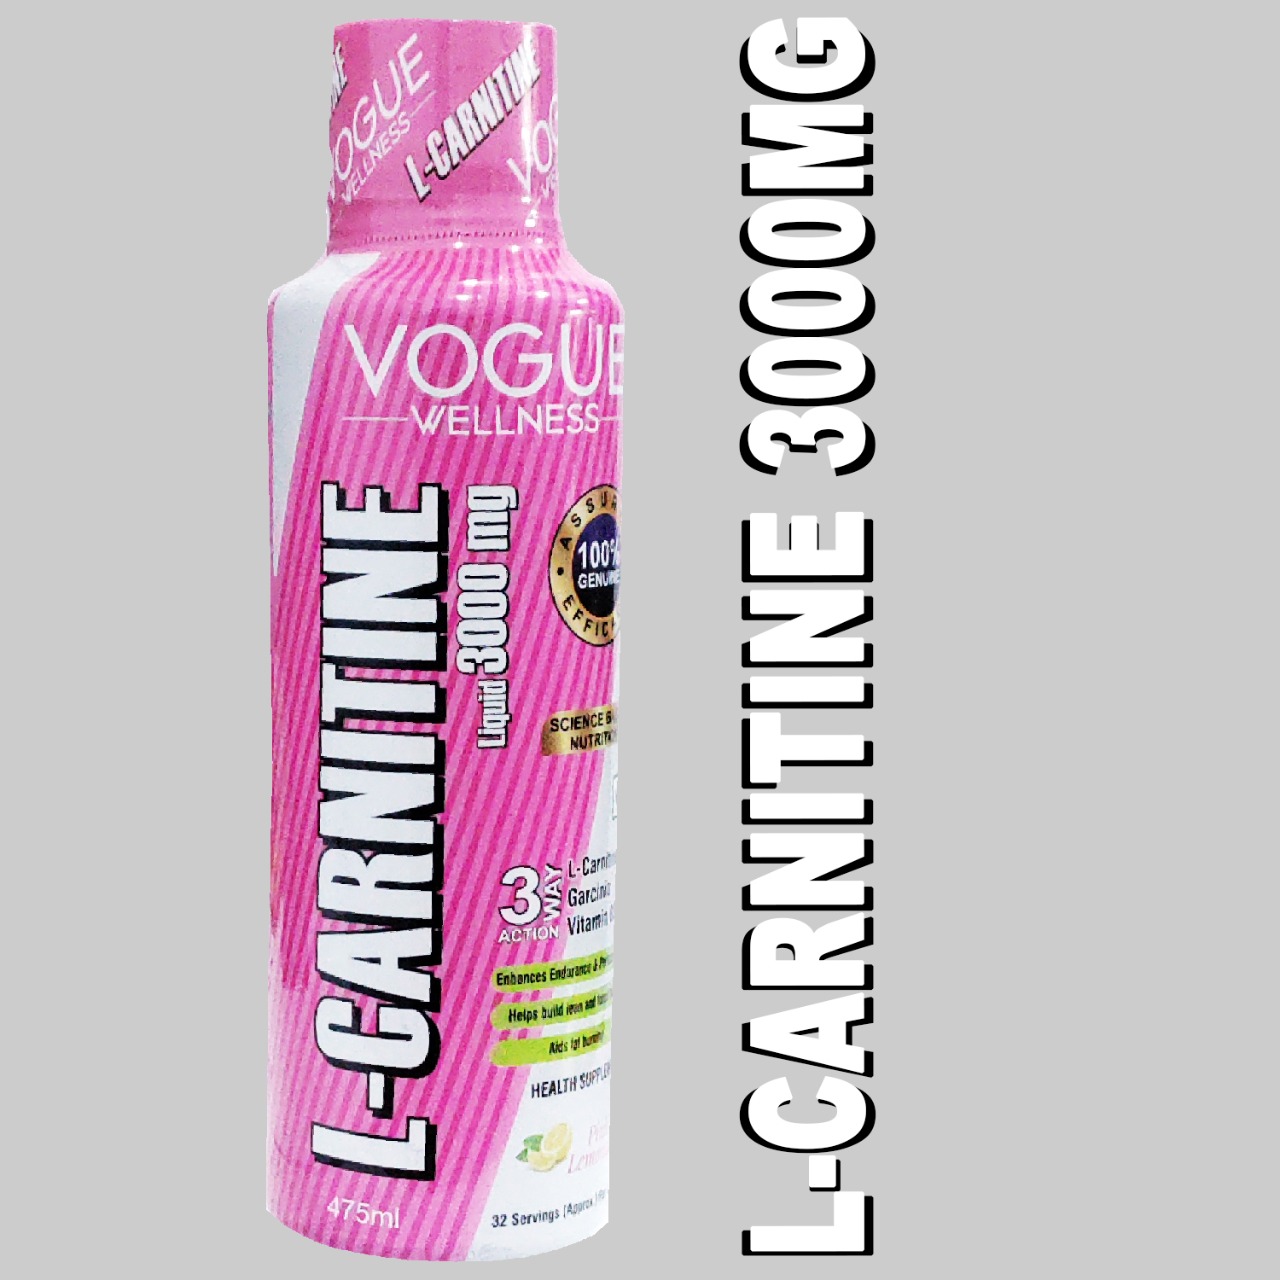 Liquid L-Carnitine bottle created by Vogue Wellness